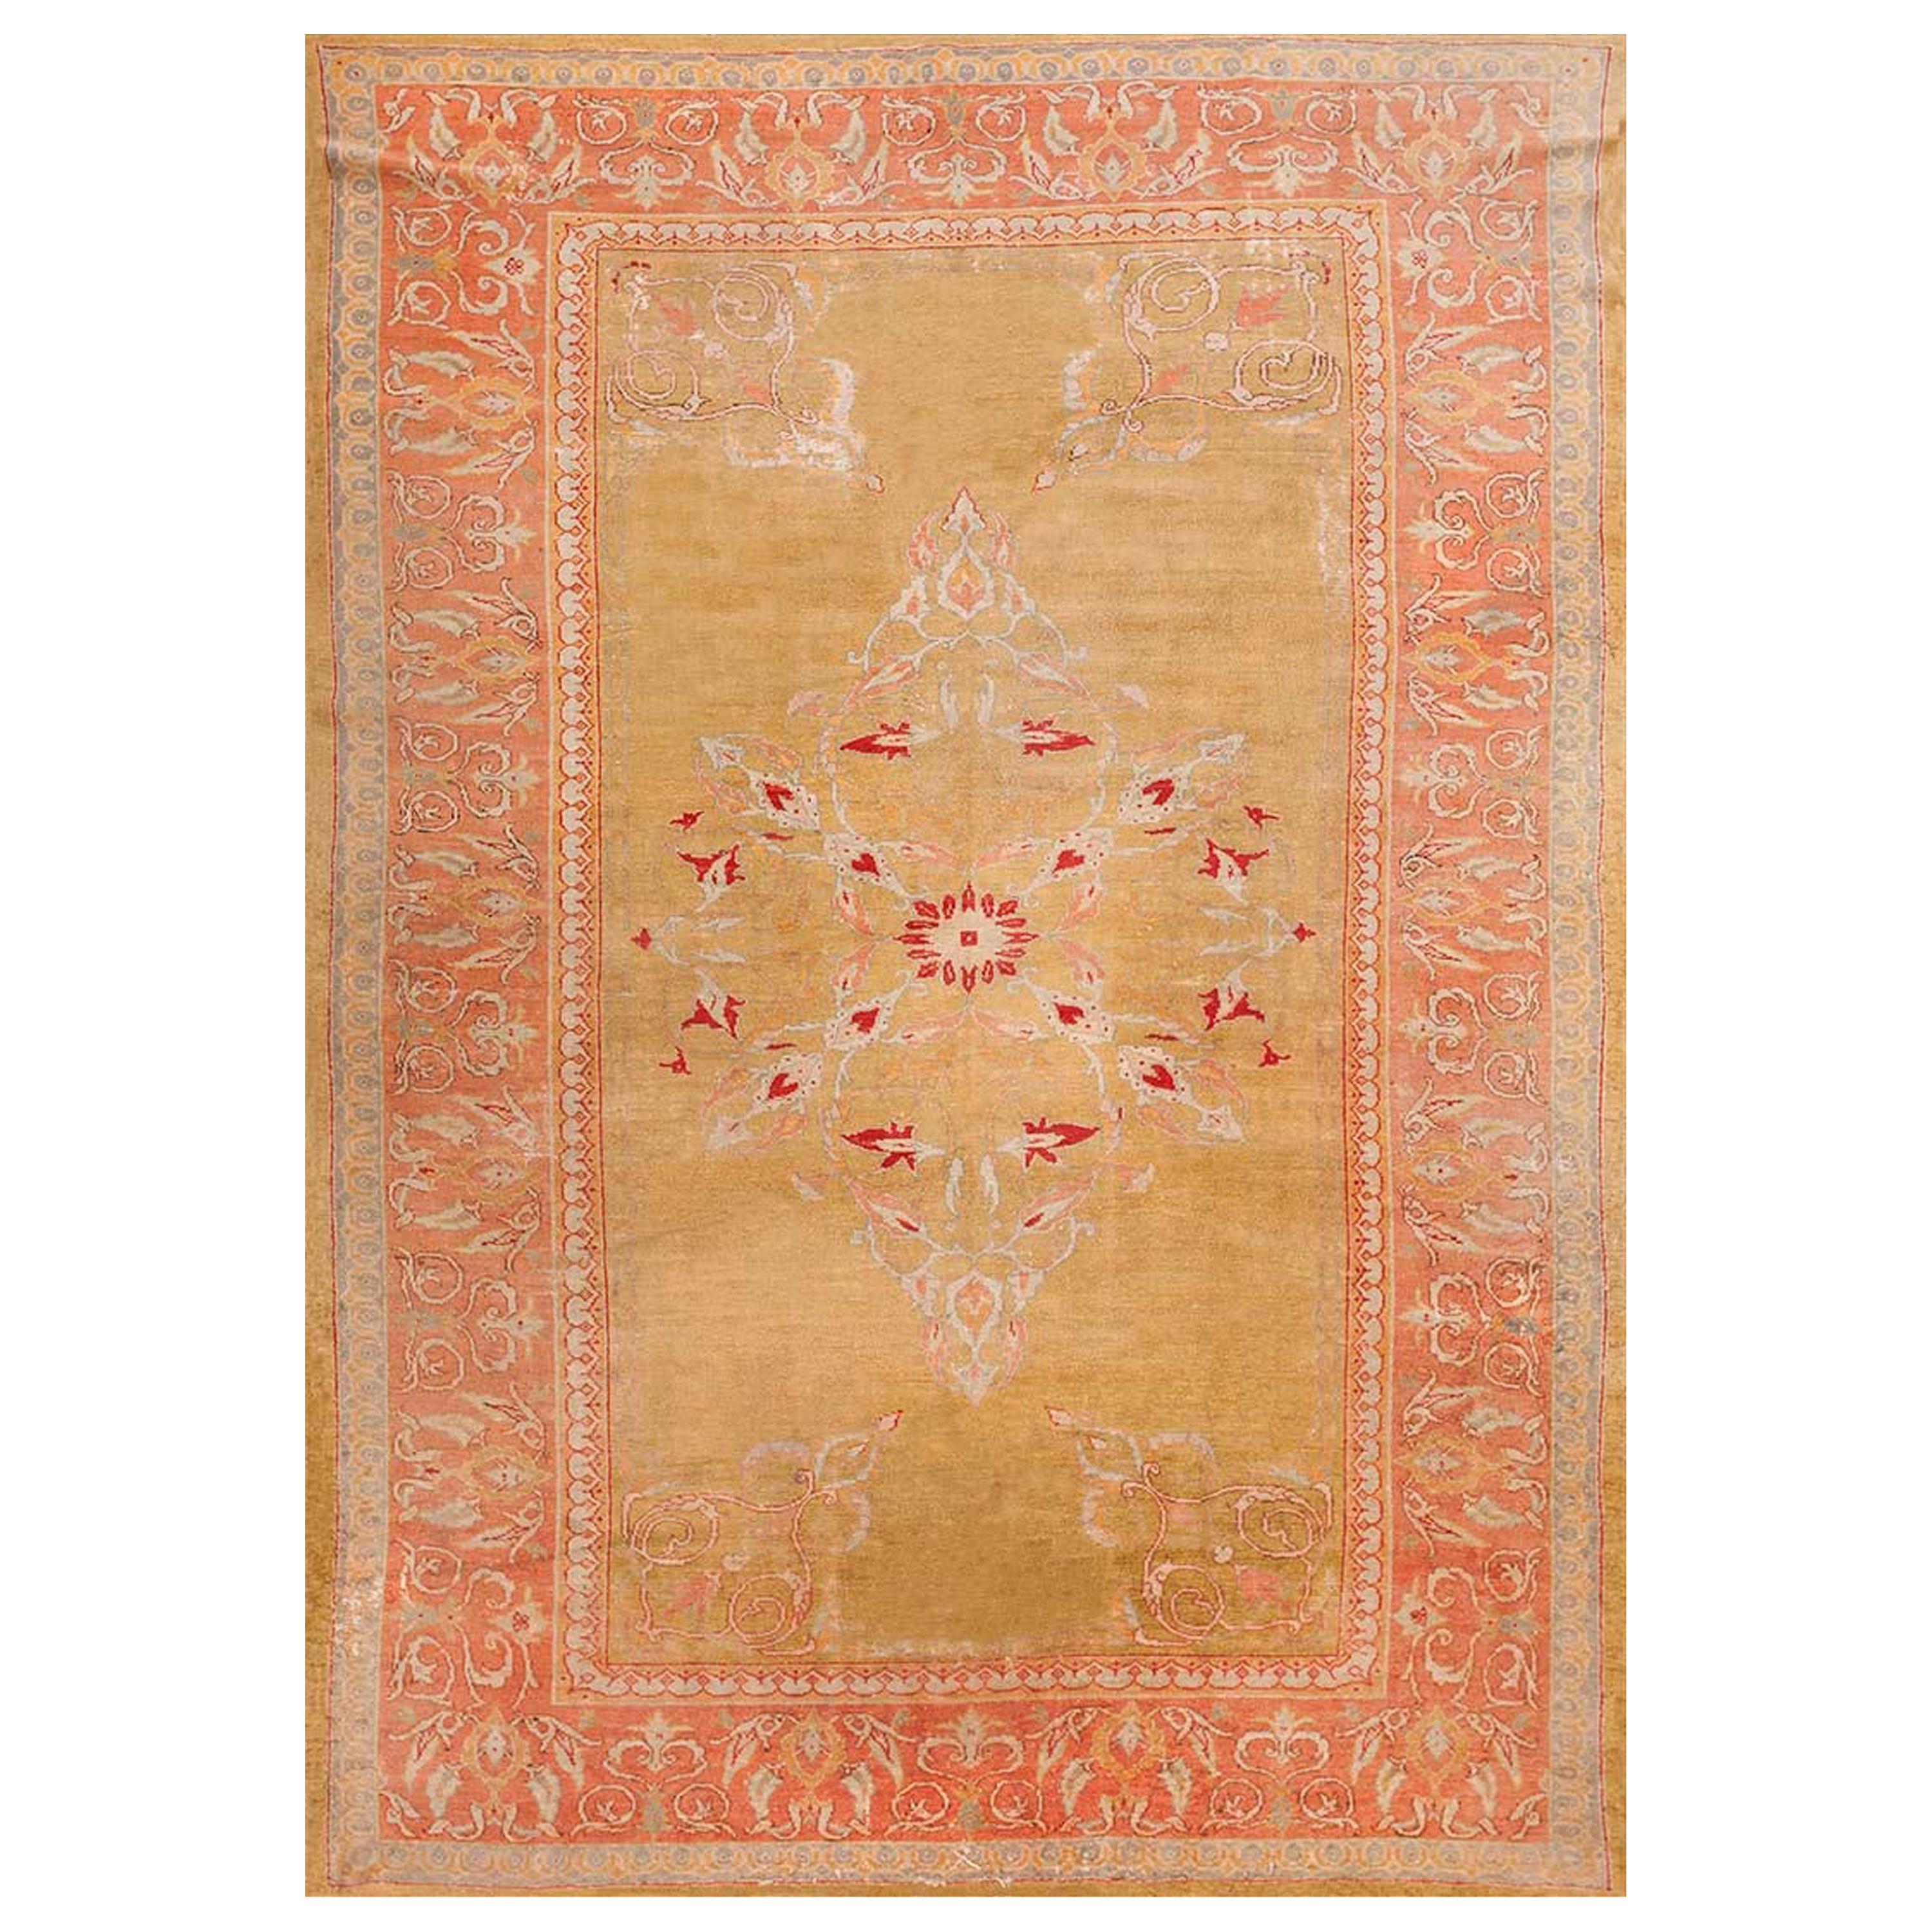 19th Century Turkish Oushak Carpet ( 7'6" x 10'10" - 233 x 330 )